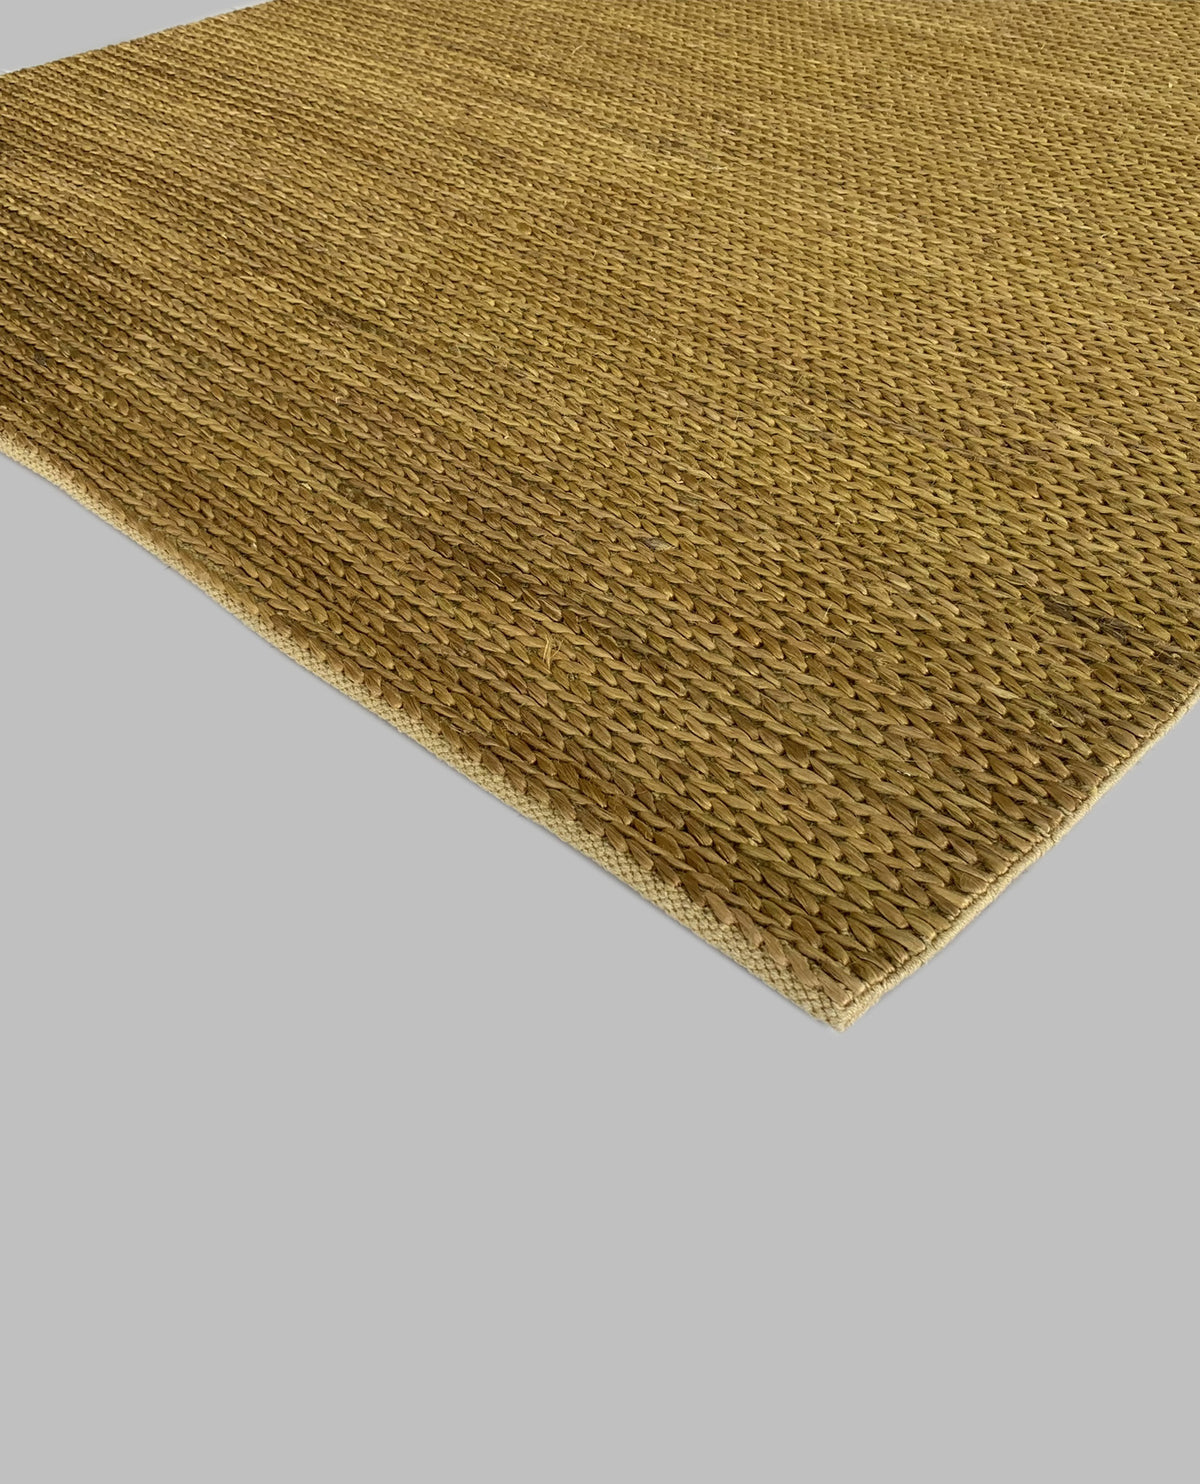 Rugslane Gold Jute Carpet 5.0ft X 8.0ft